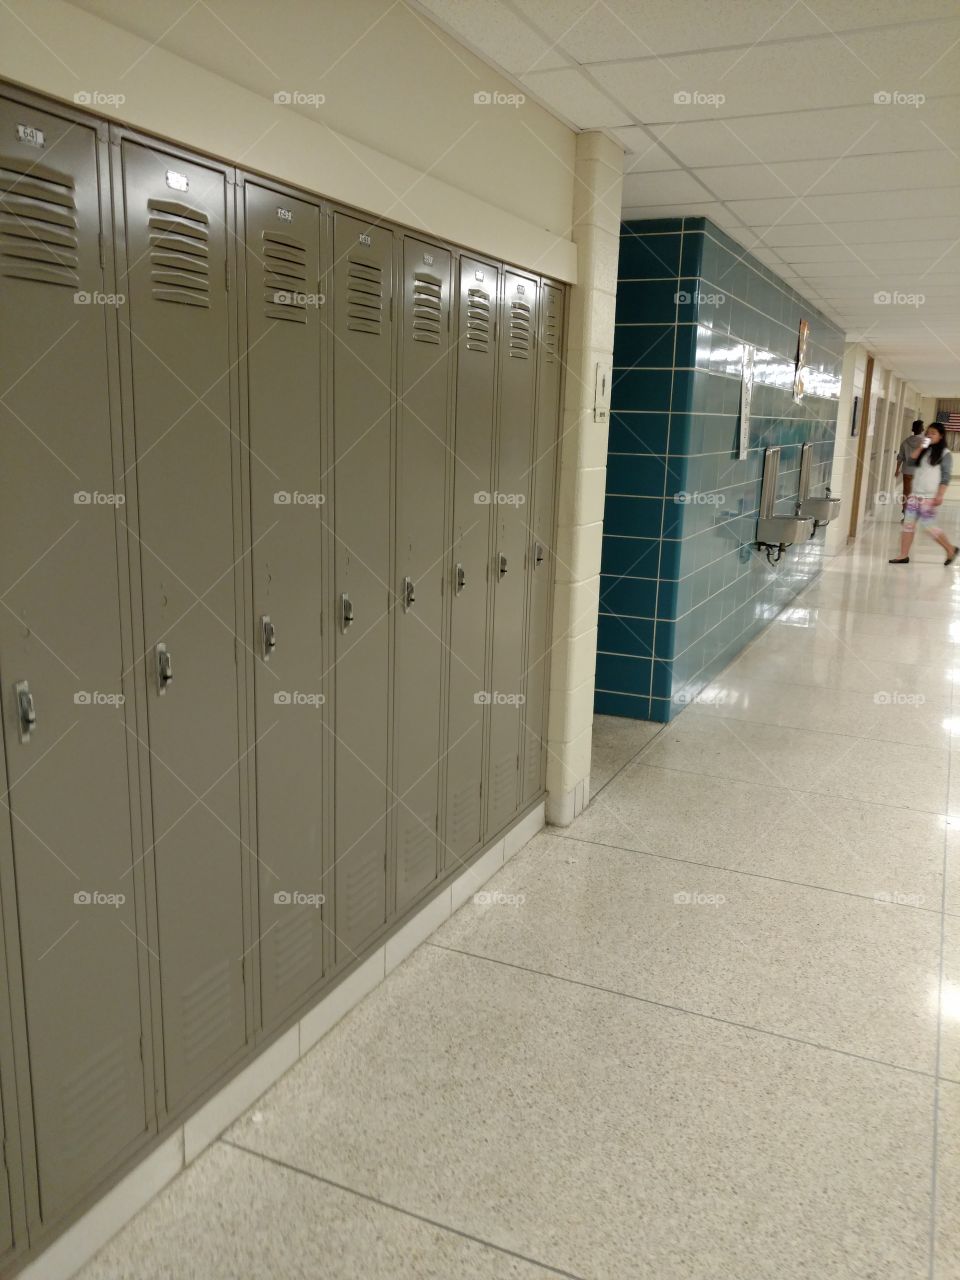 School Hallway Locker